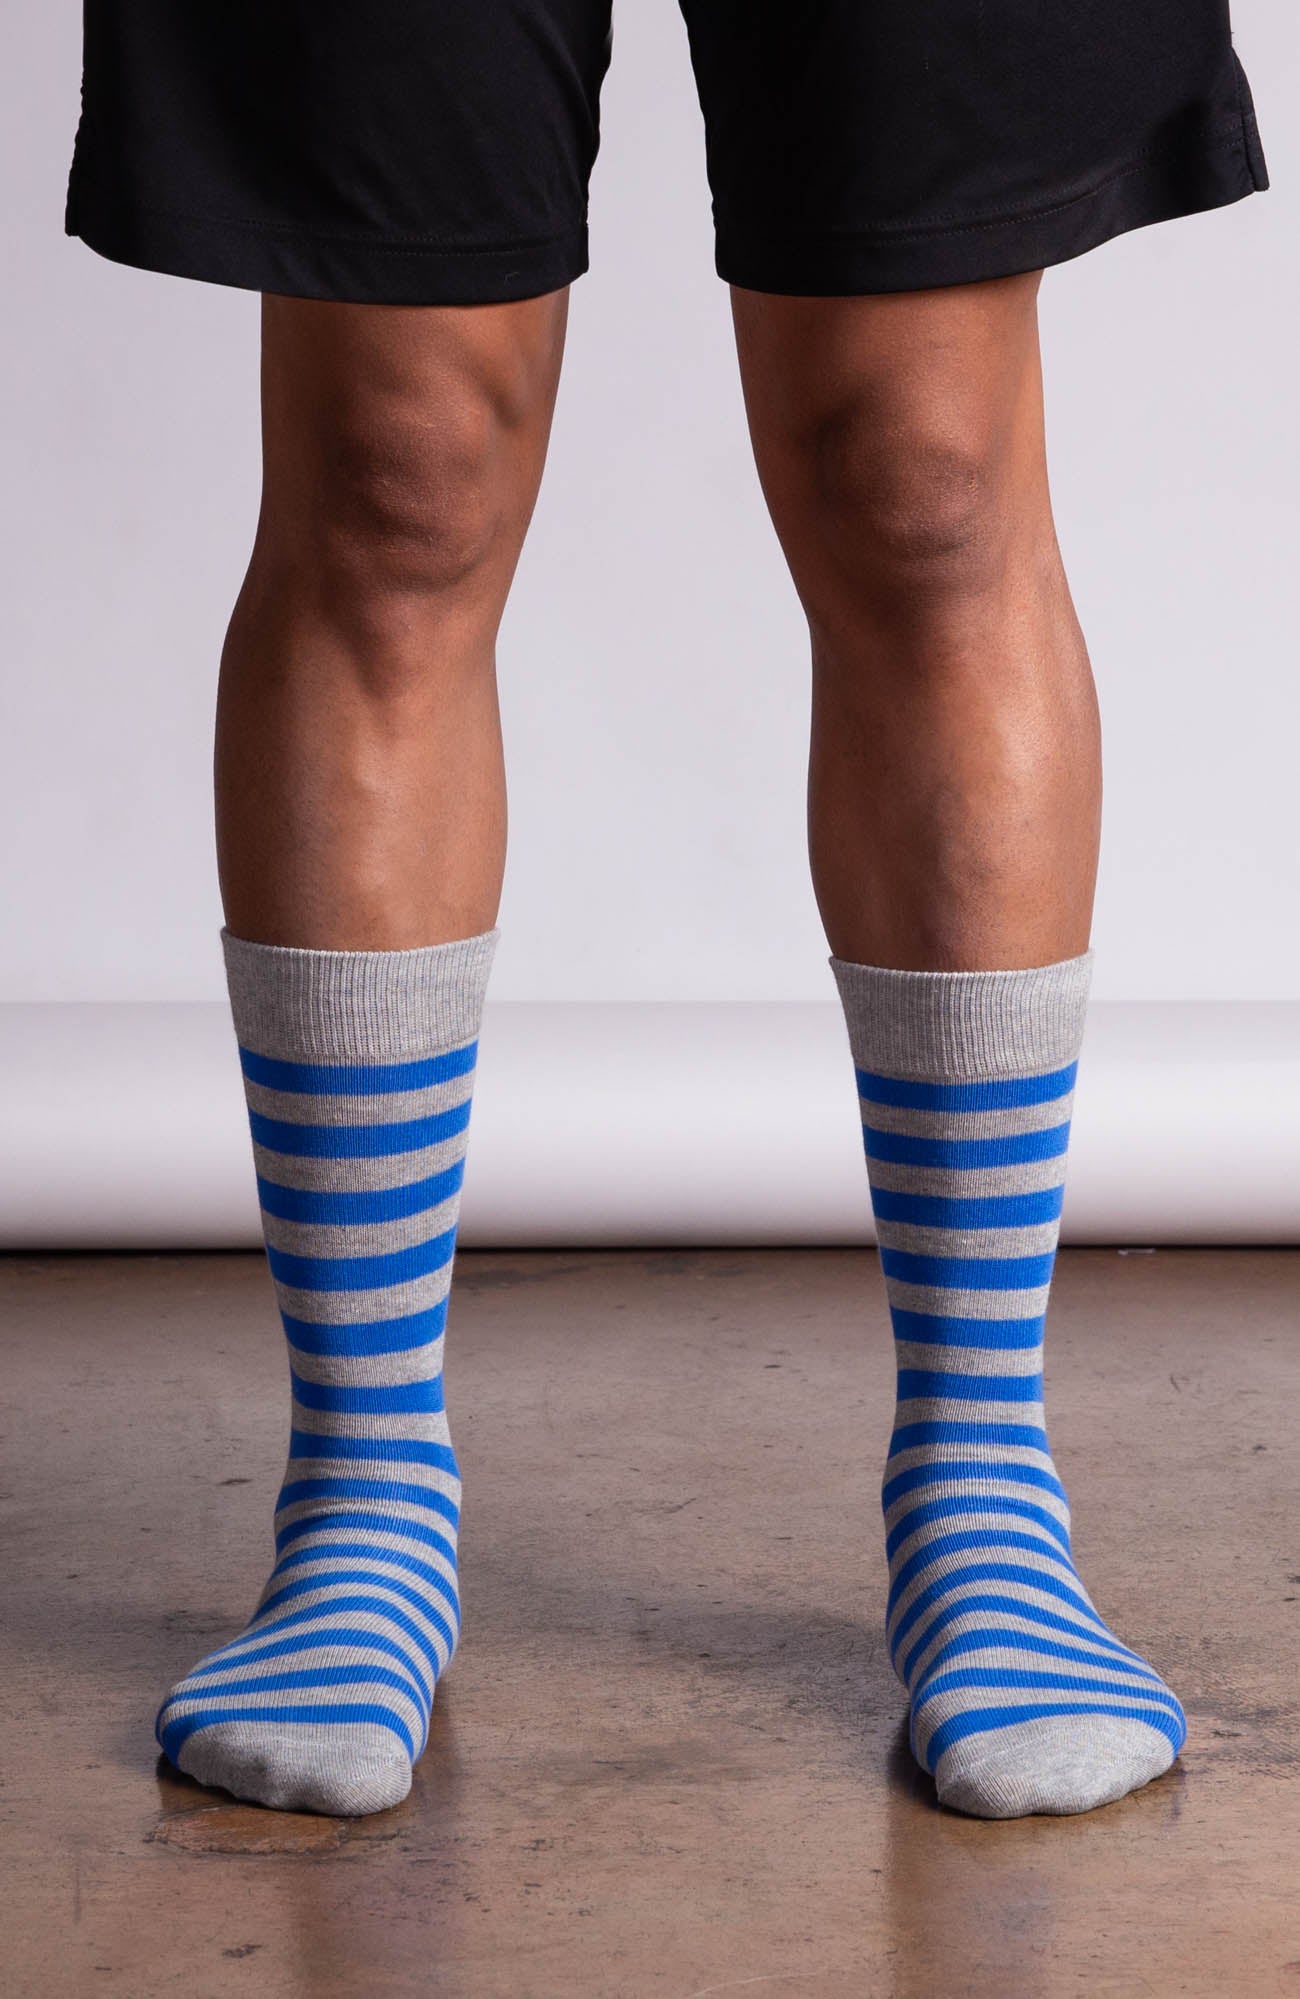 Mens Classic Stripe Socks